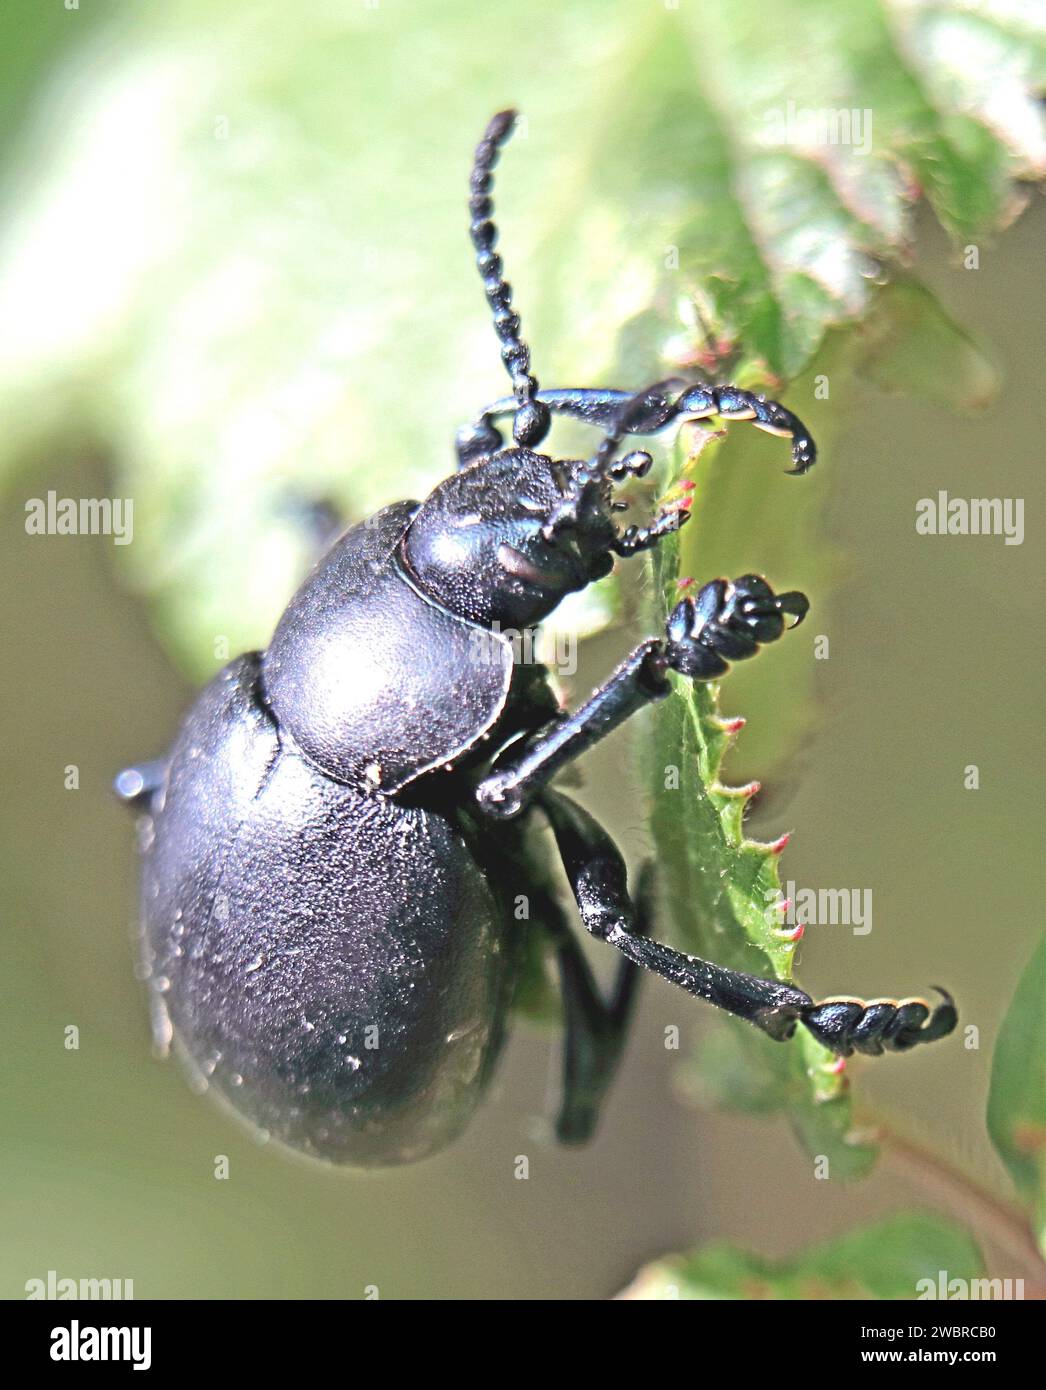 Beetle dal naso sanguinoso Foto Stock